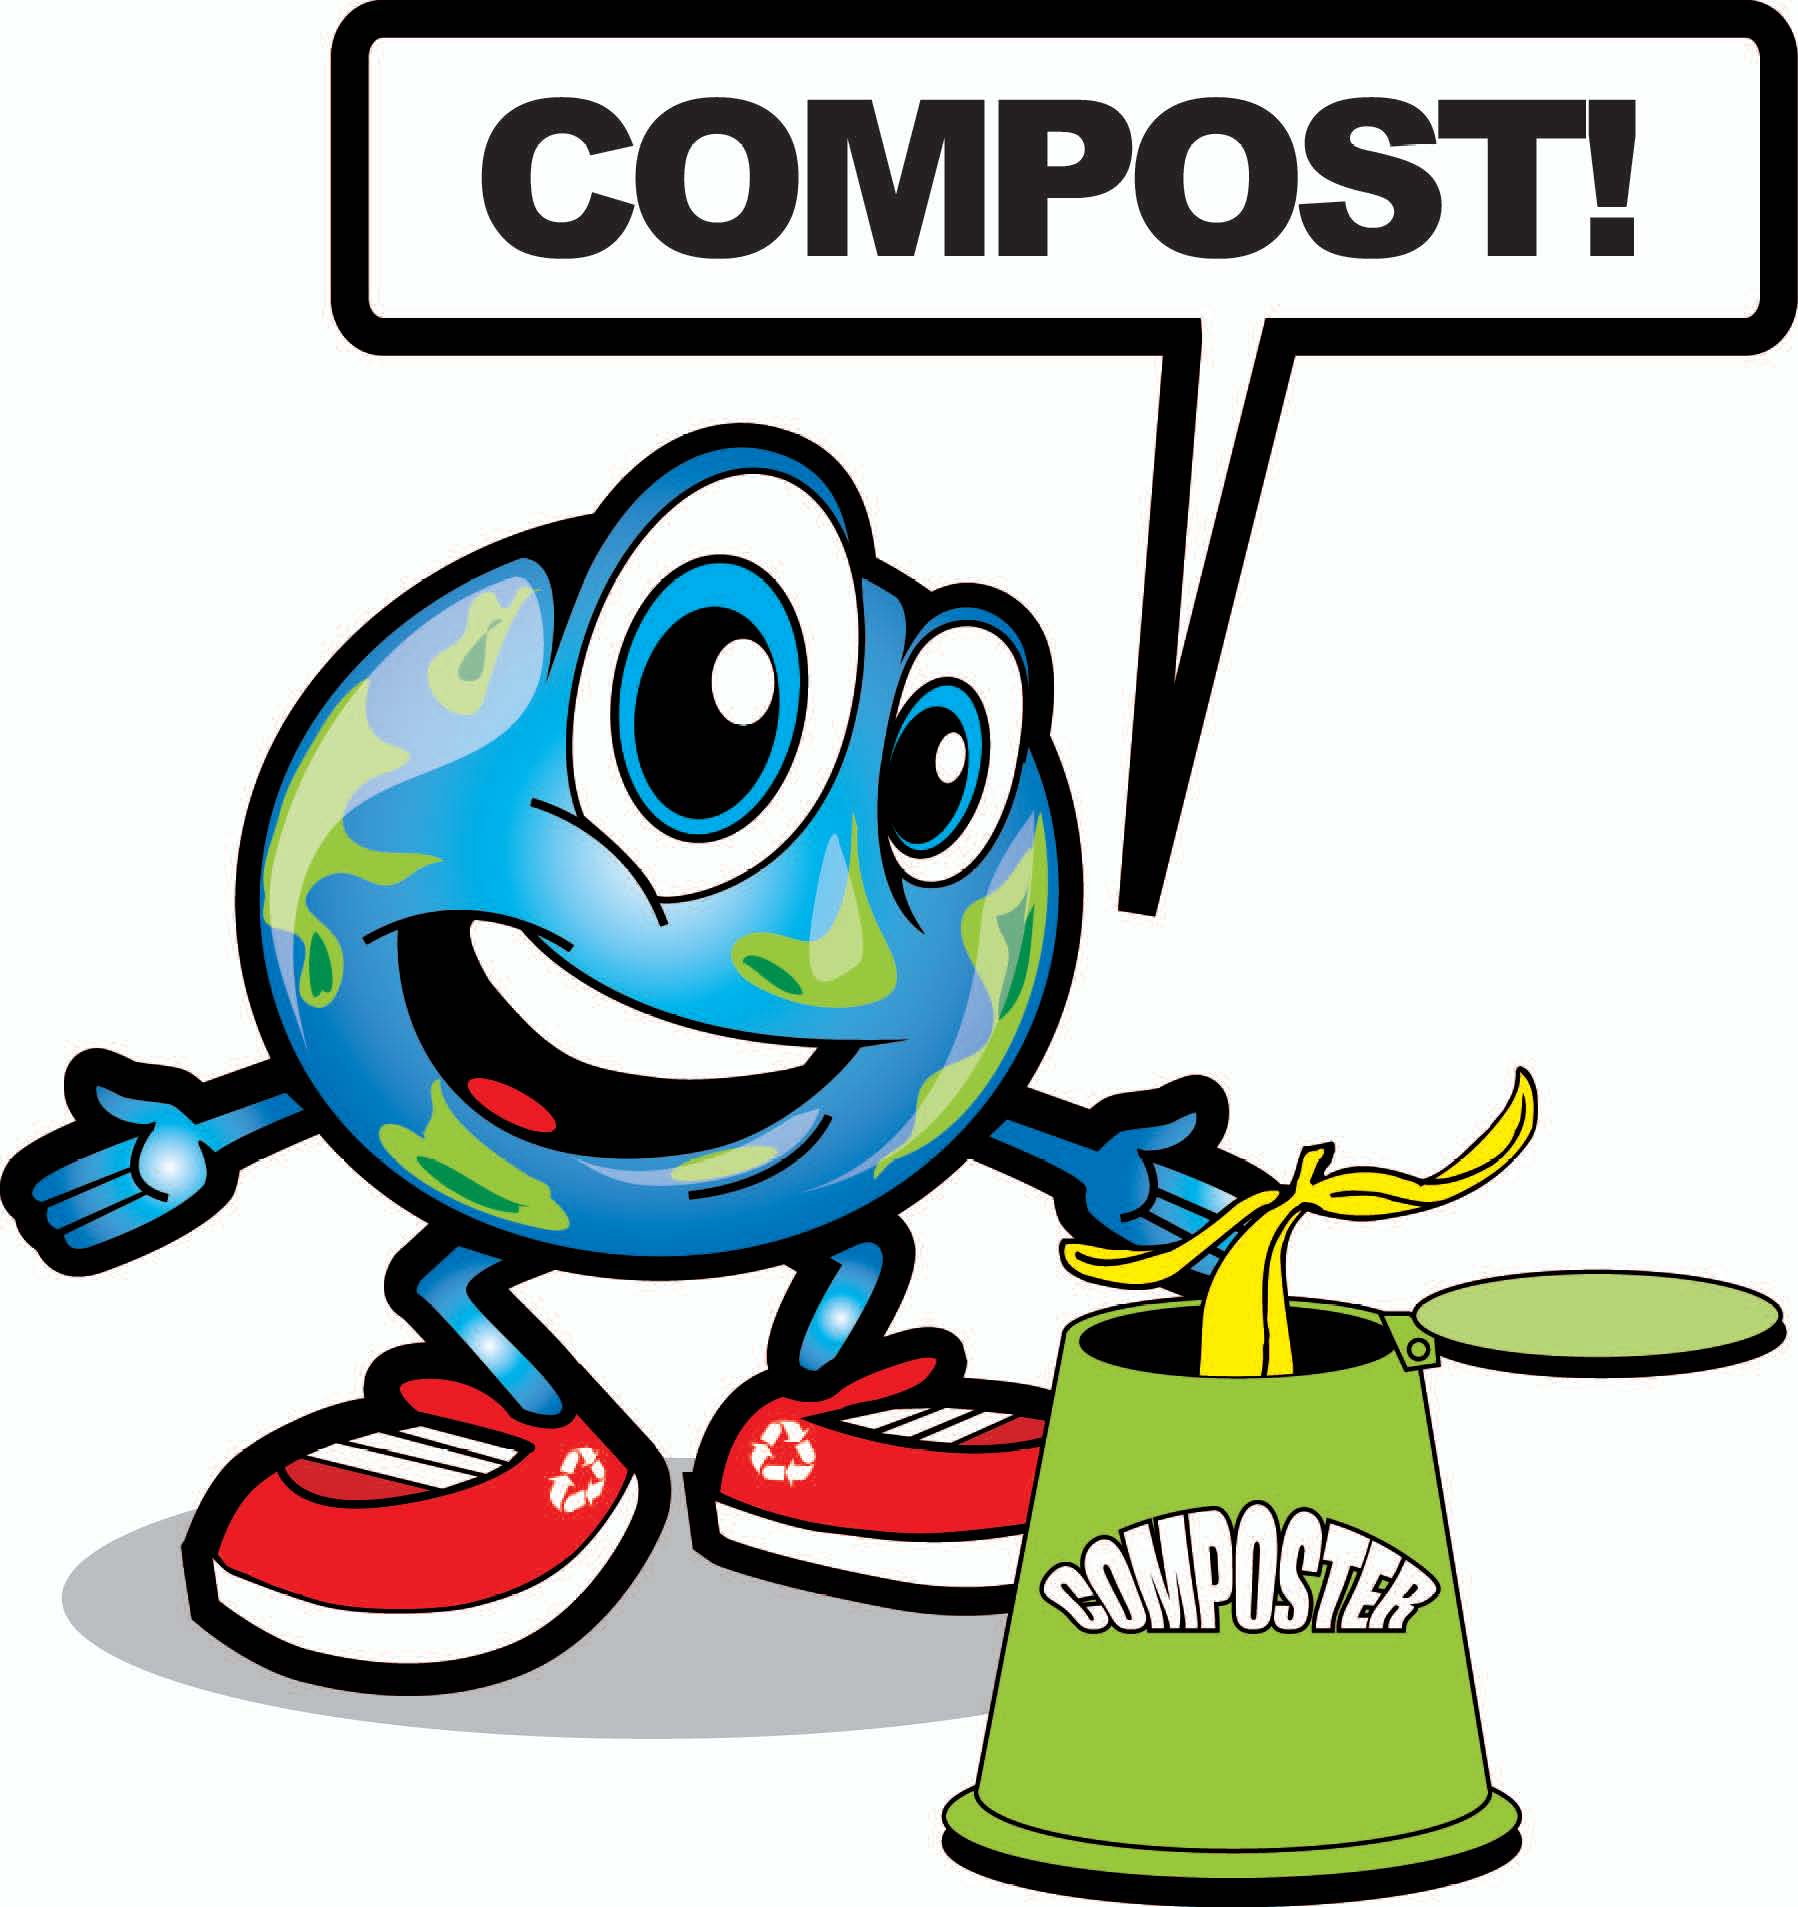 GlobeguyComposting